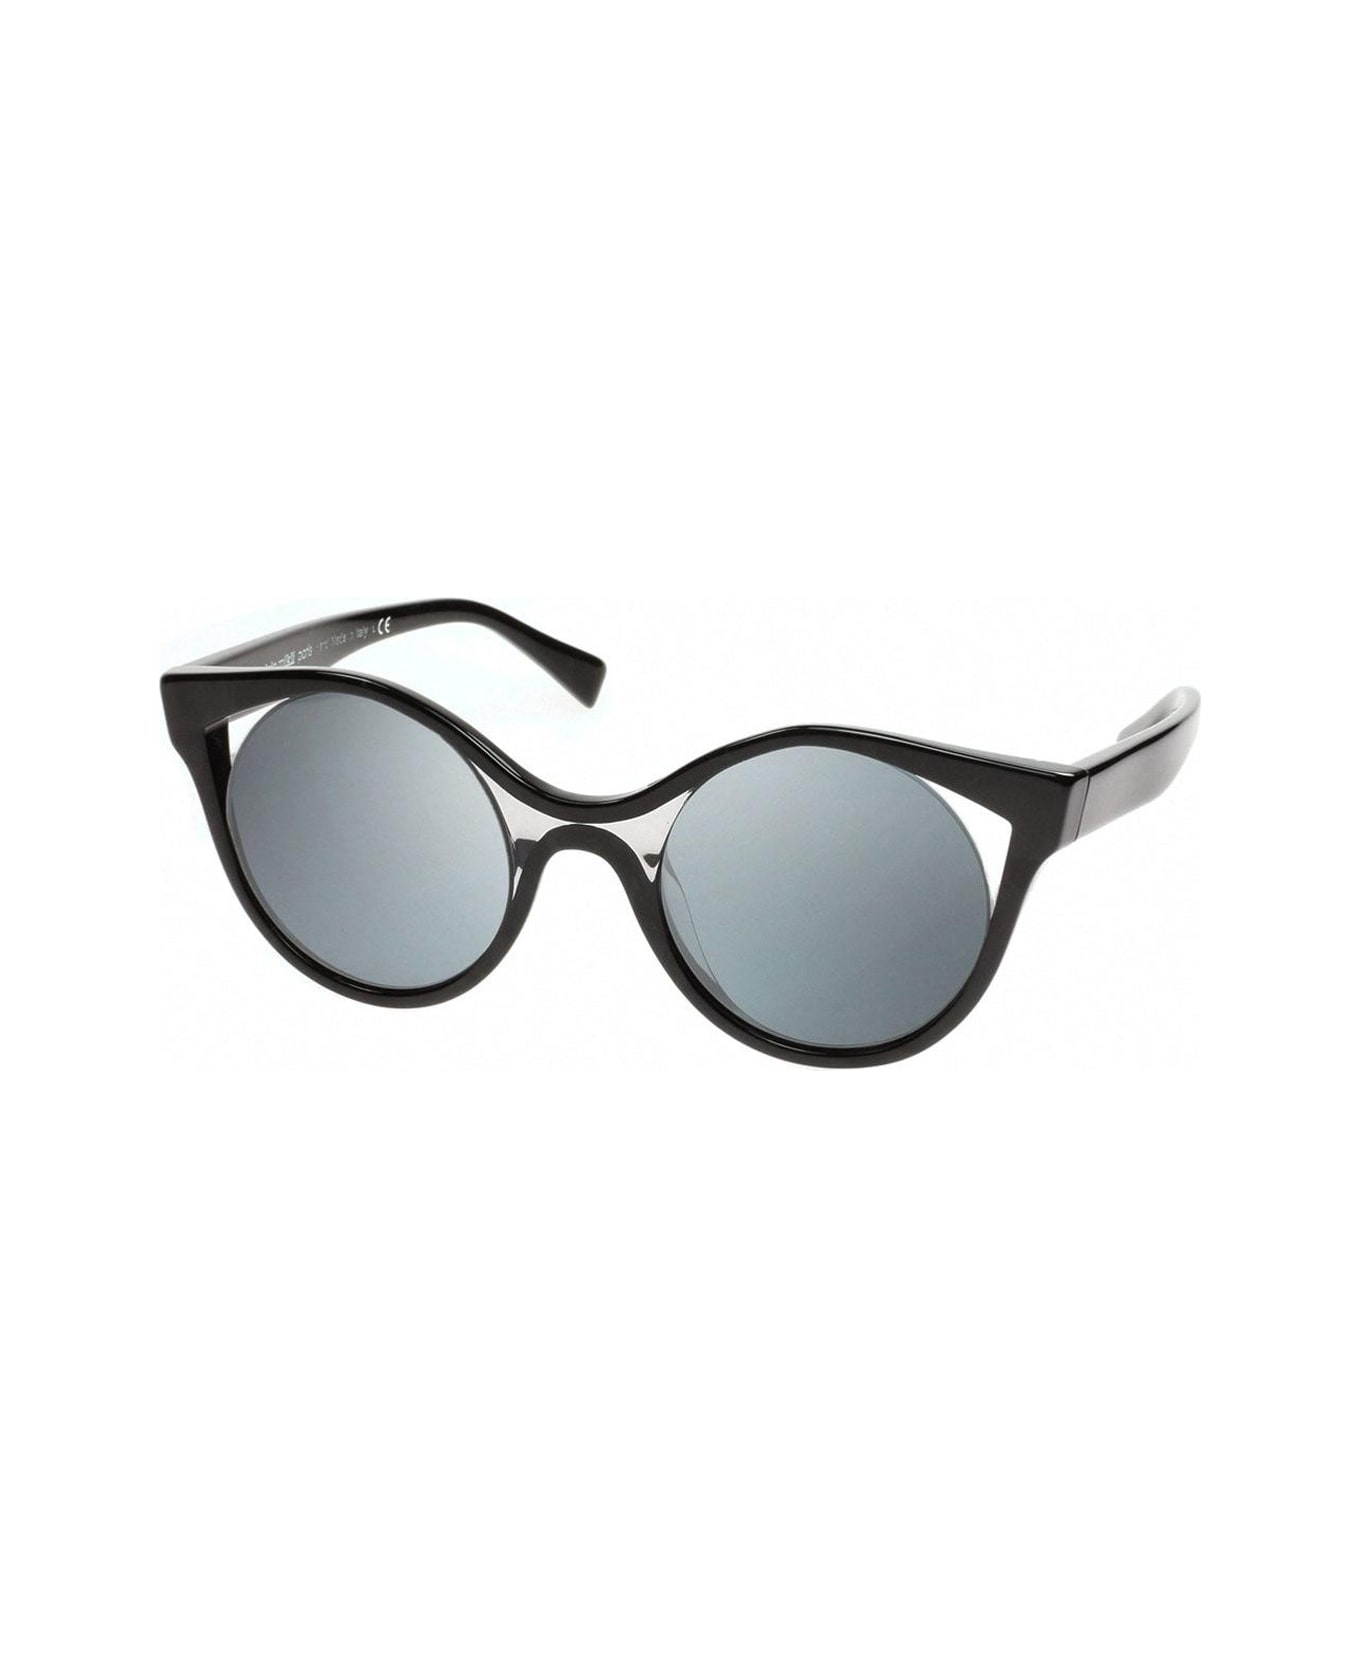 Alain Mikli 0a05033 Sunglasses - Nero サングラス